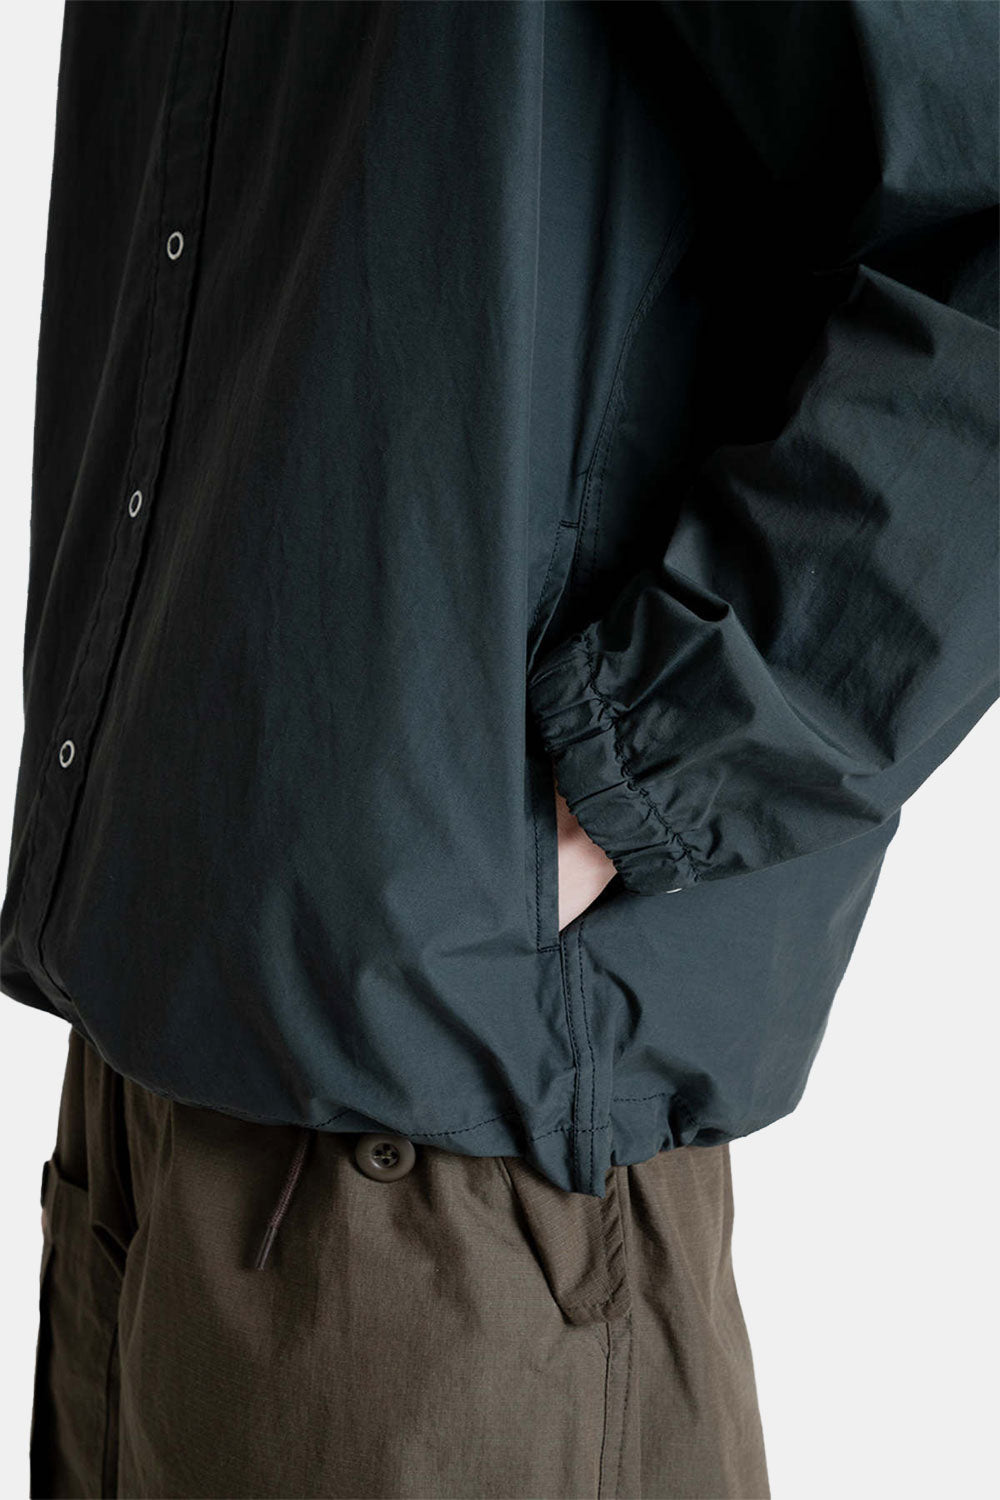 Frizmworks Nylon String Shirt Jacket (Teal)